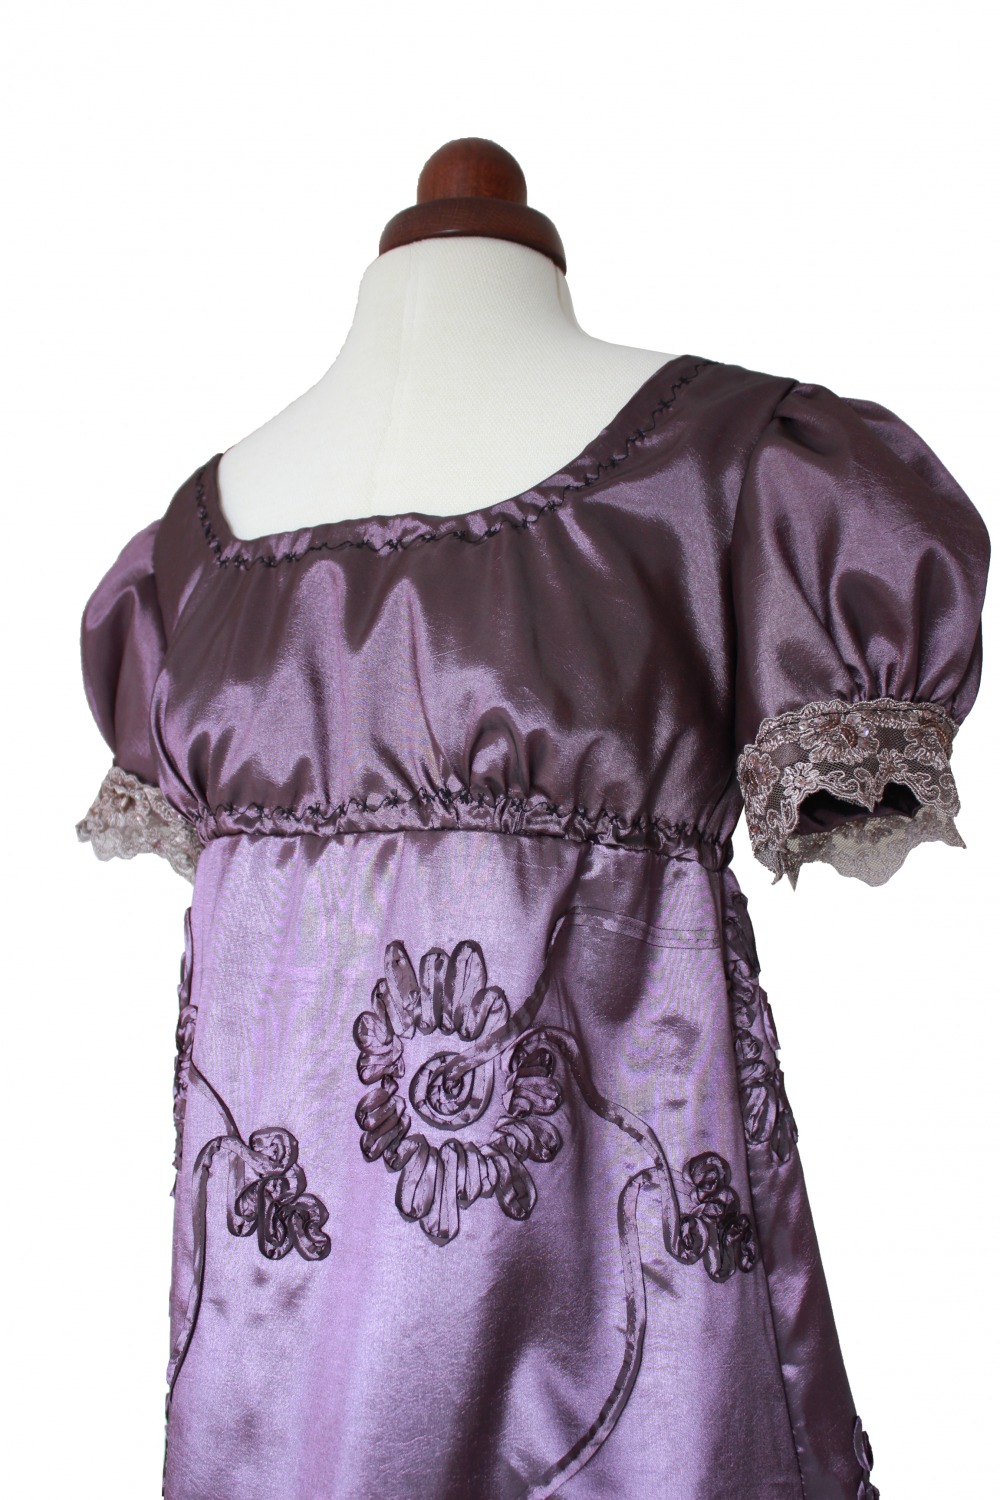 Ladies 18th 19th Regency Jane Austen Costume Evening Ball Gown Petite Size 8 - 10 Image